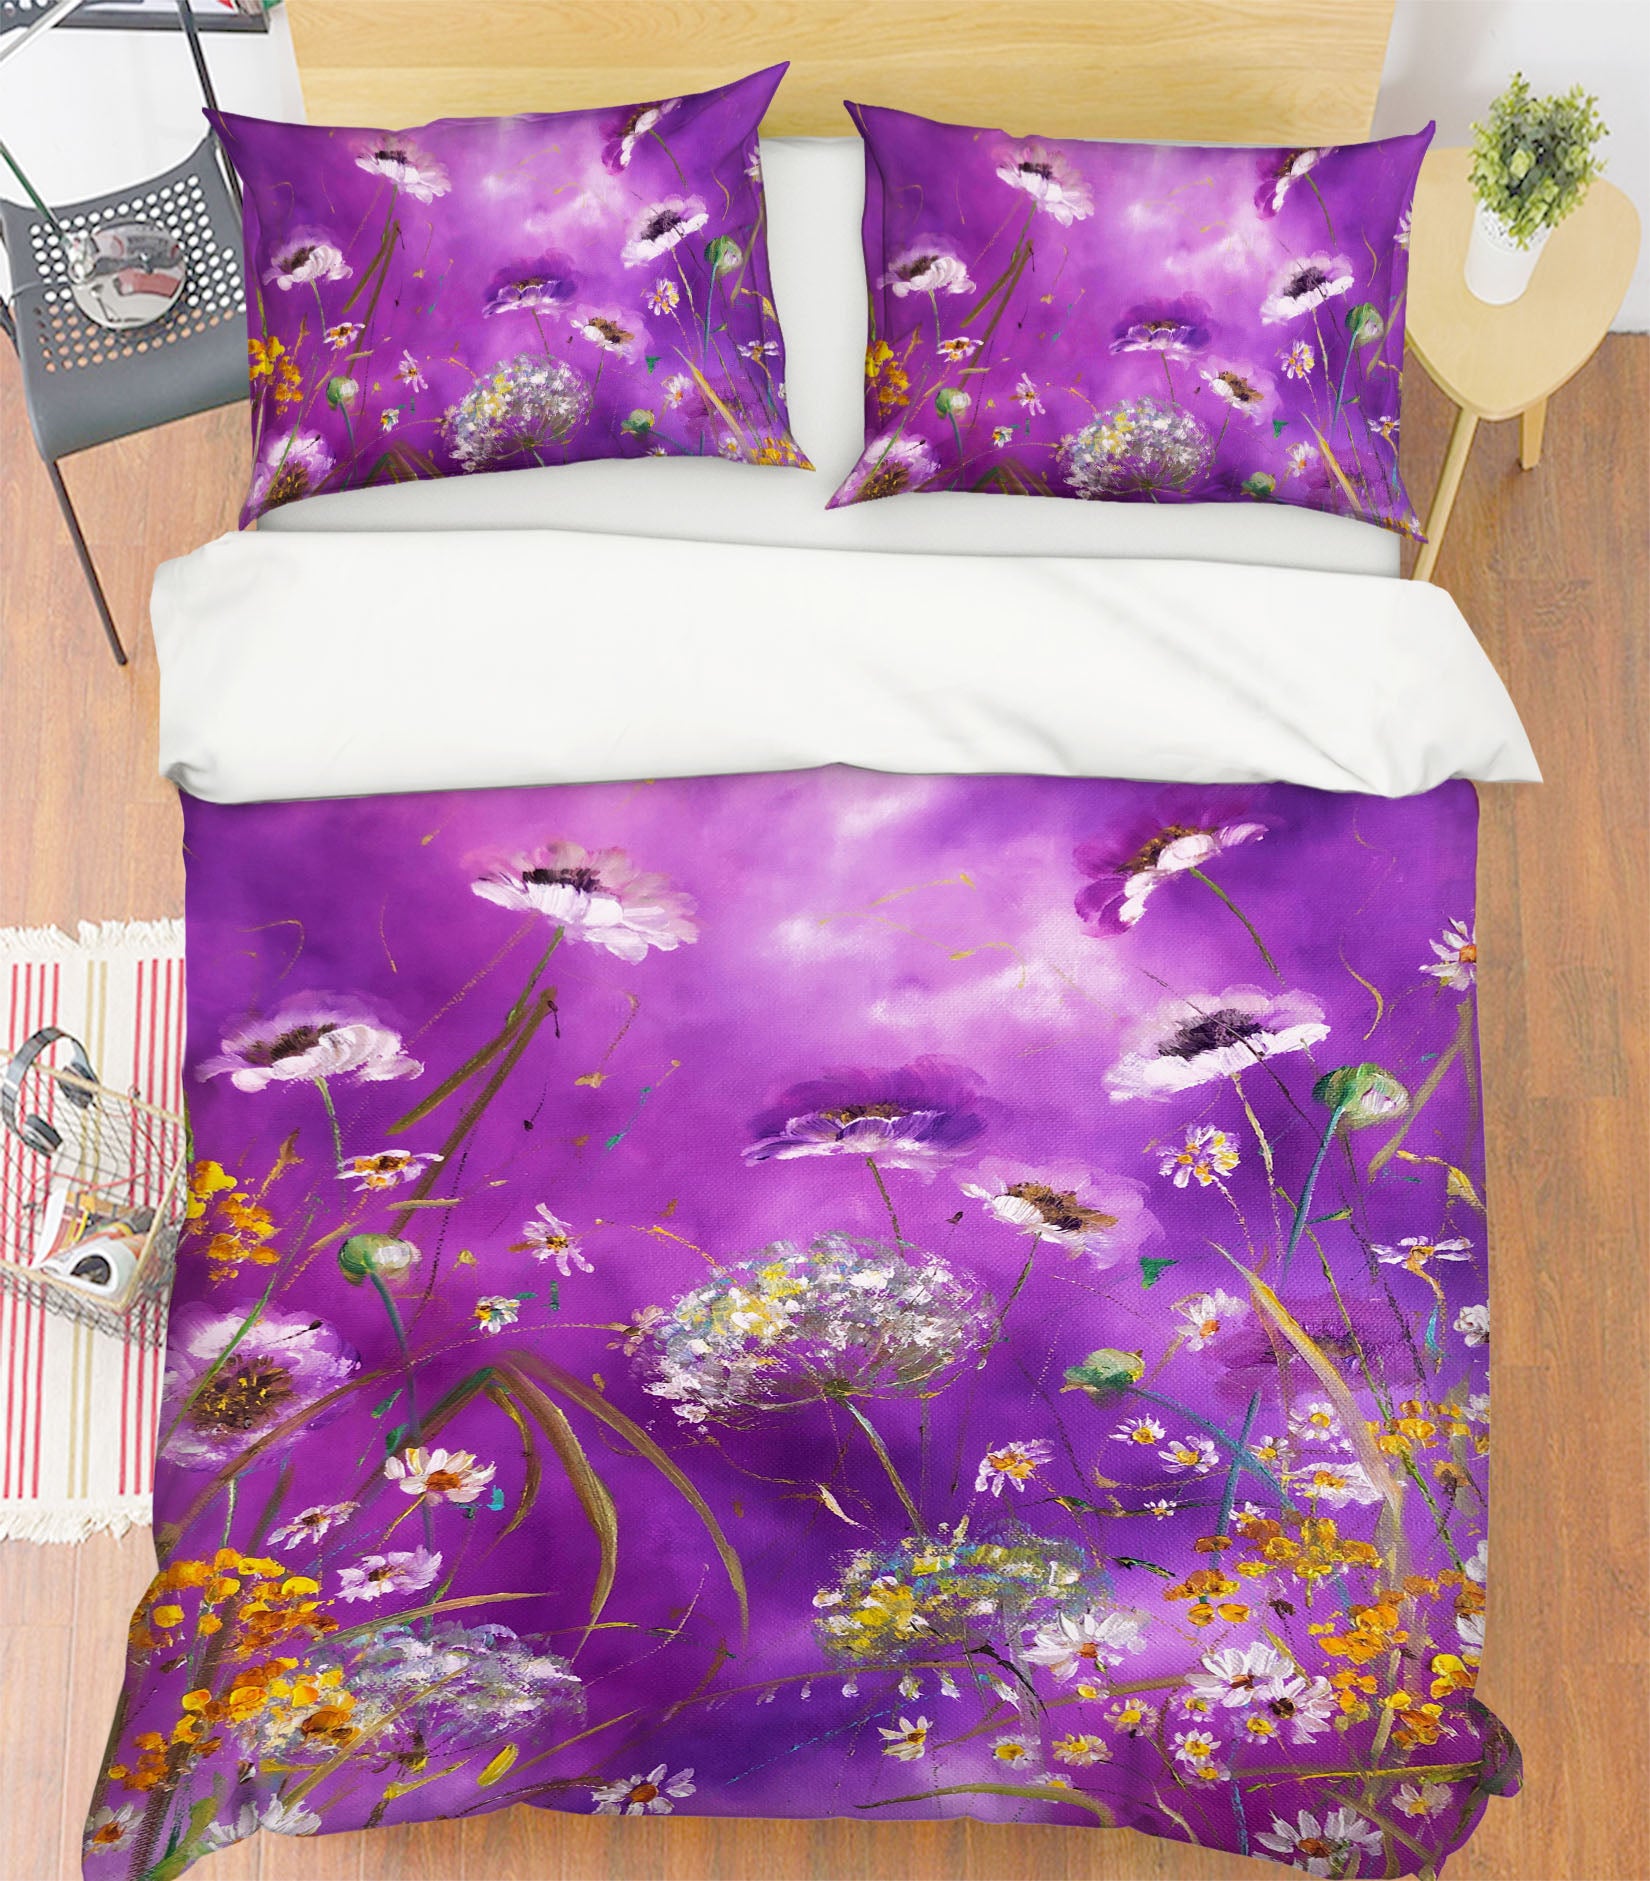 3D Purple Flower 536 Skromova Marina Bedding Bed Pillowcases Quilt